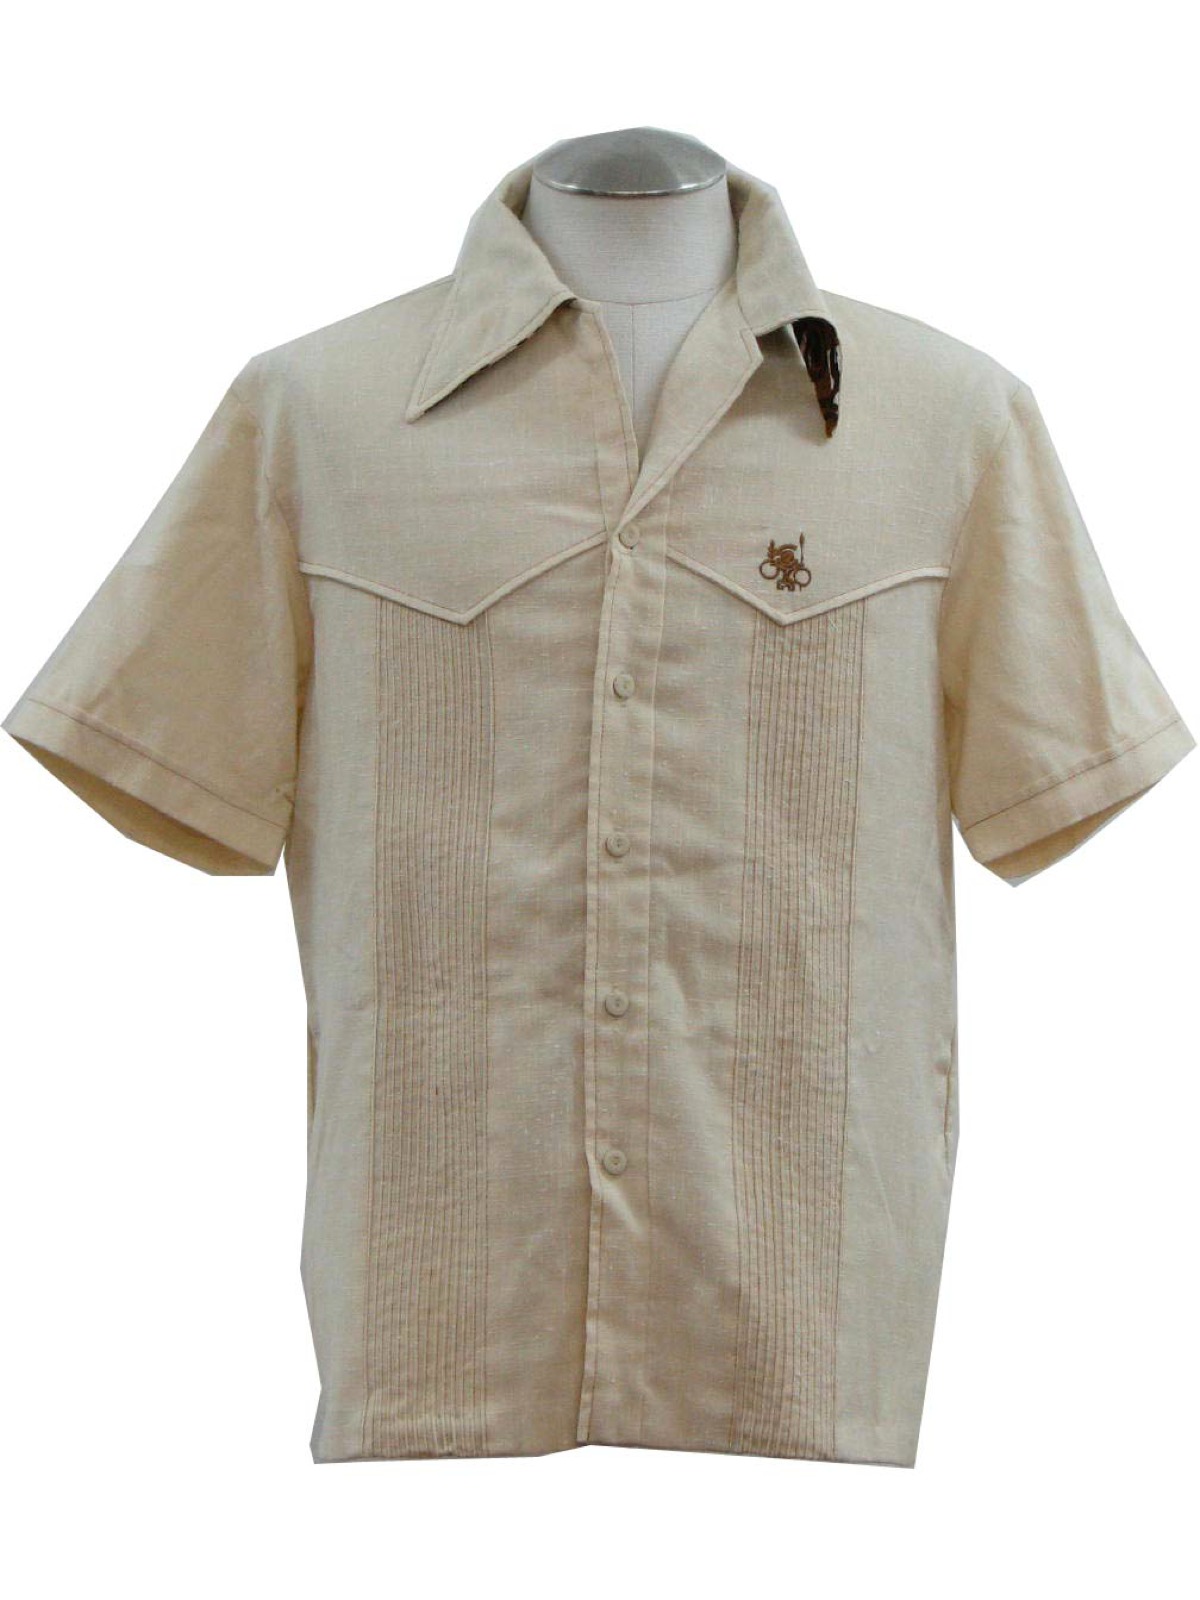 Retro 1970's Hawaiian Shirt (Iolani) : 70s -Iolani- Mens pale beige ...